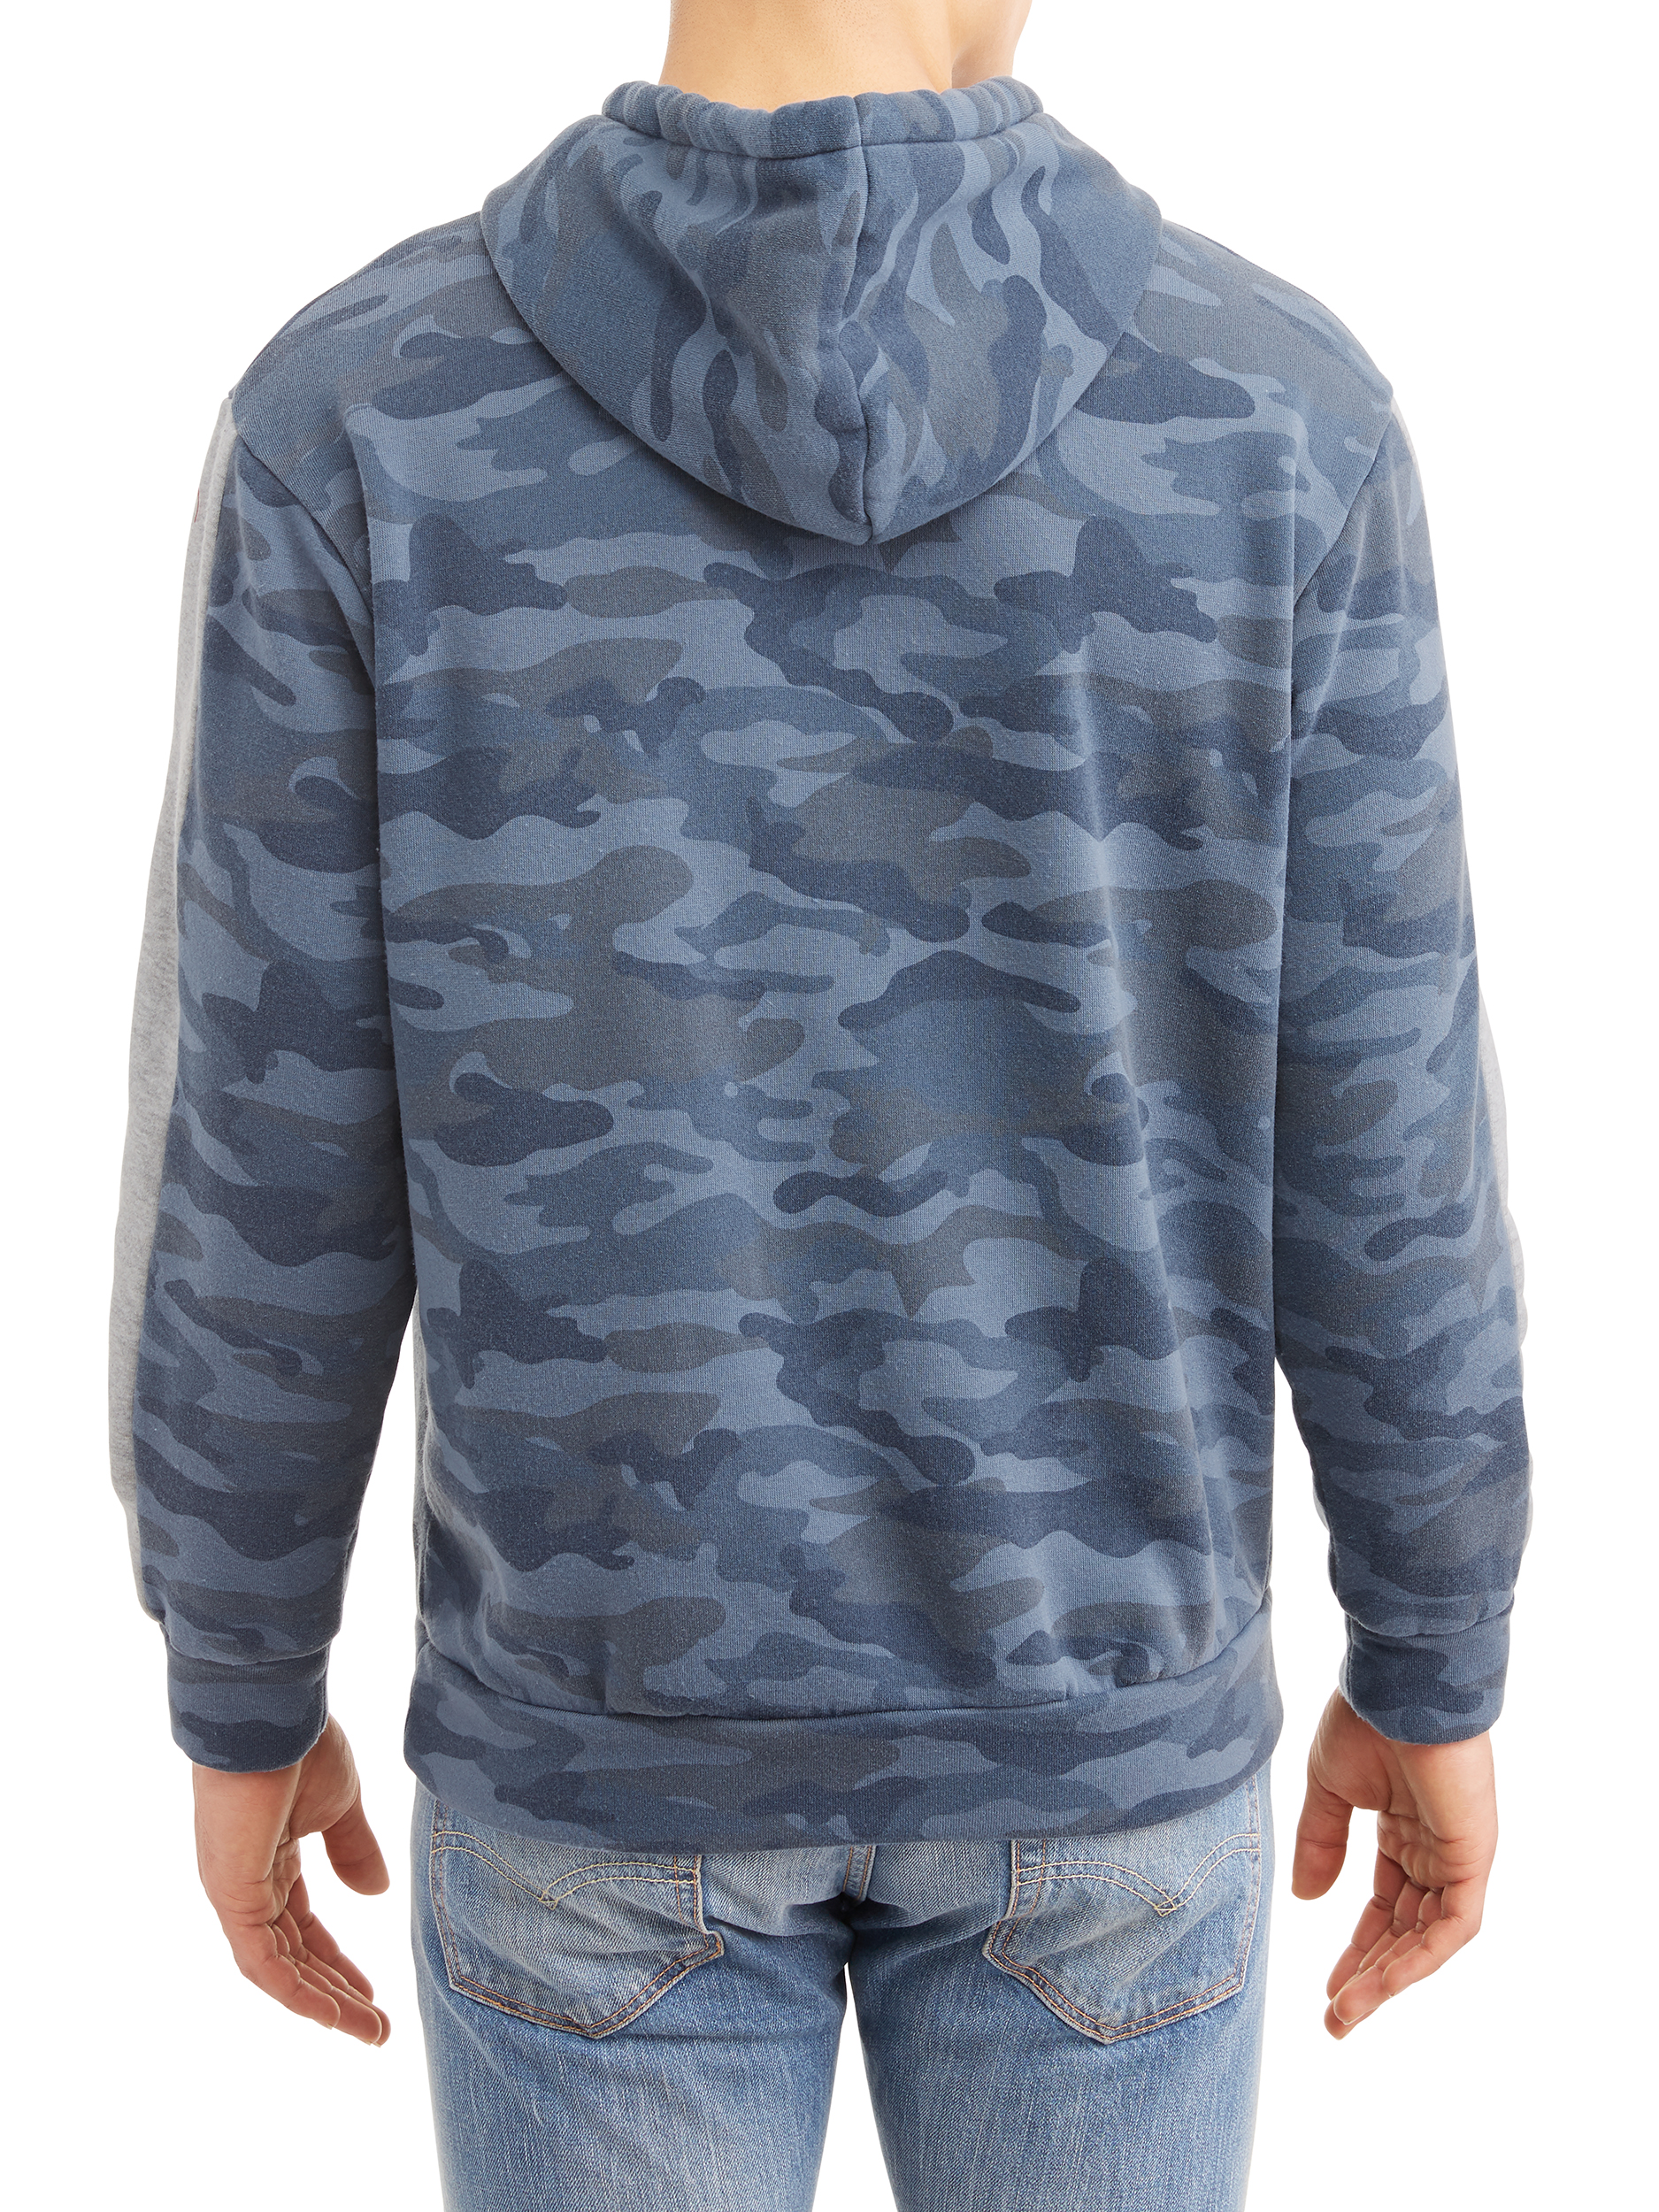 Pnw Men's camo print fleece hood with kangaroo pocket, up to Size 3xl - image 3 of 4